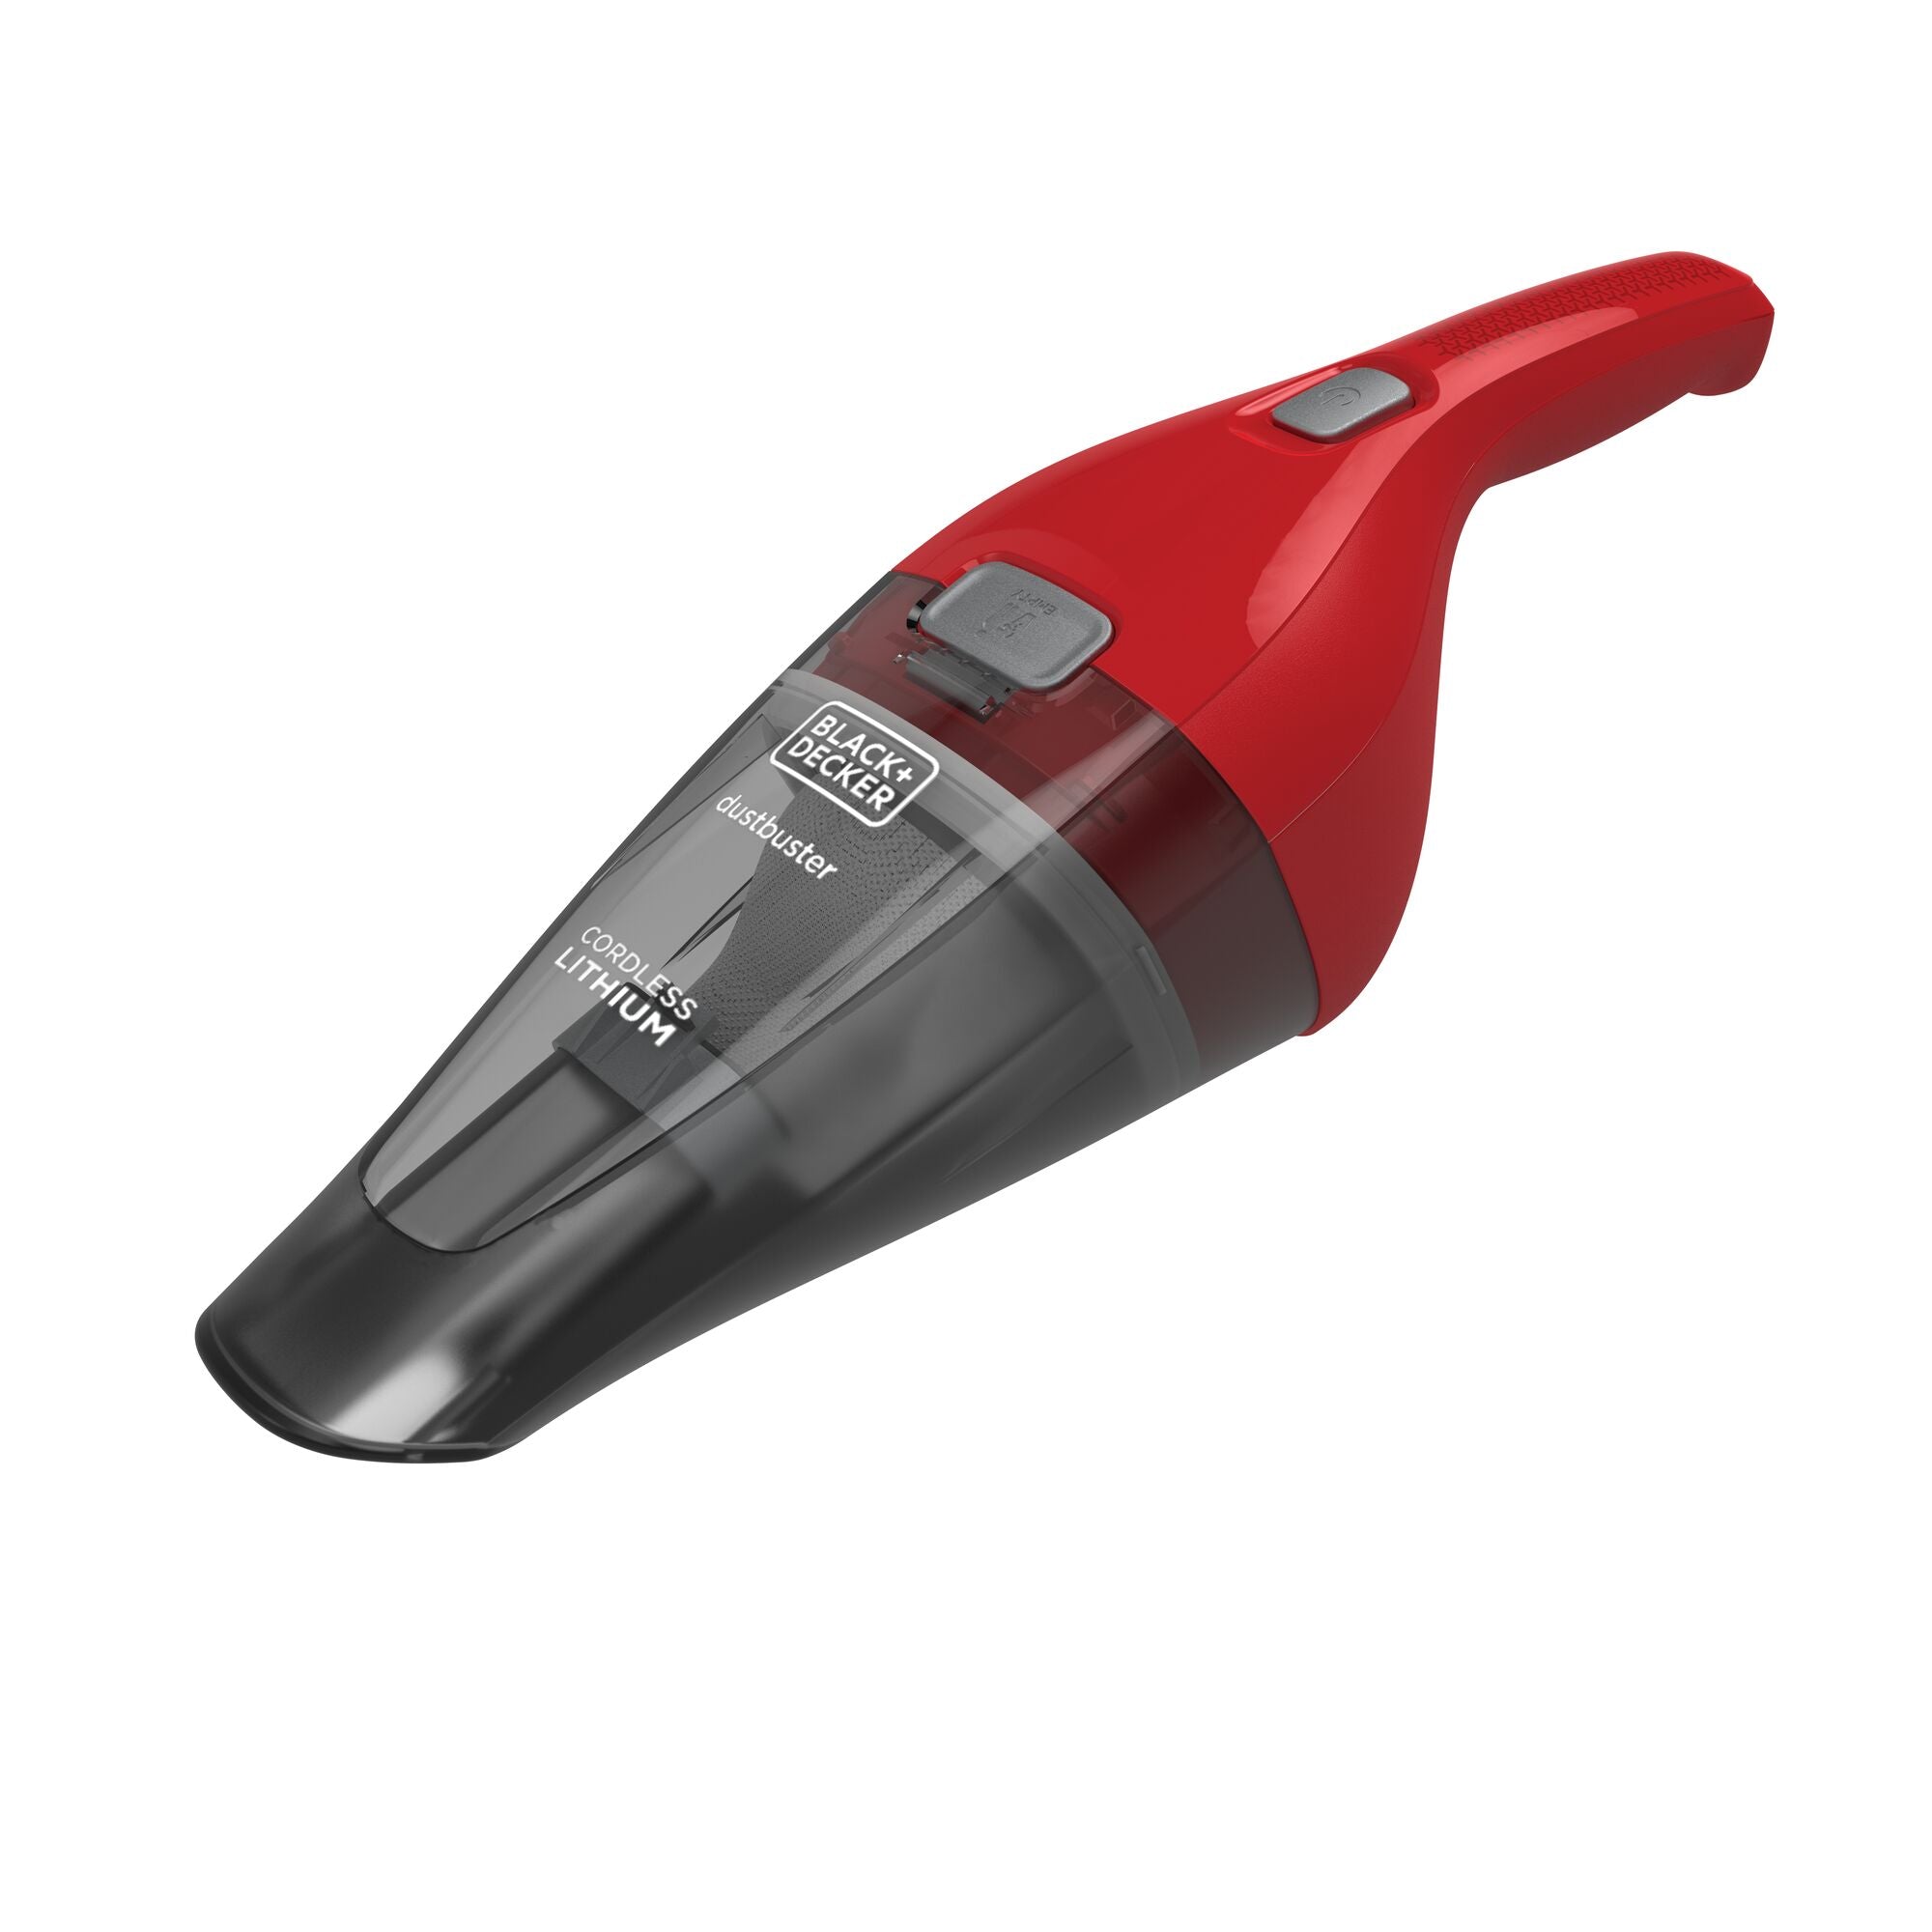 Black+Decker dustbuster Hand Vacuum Review 